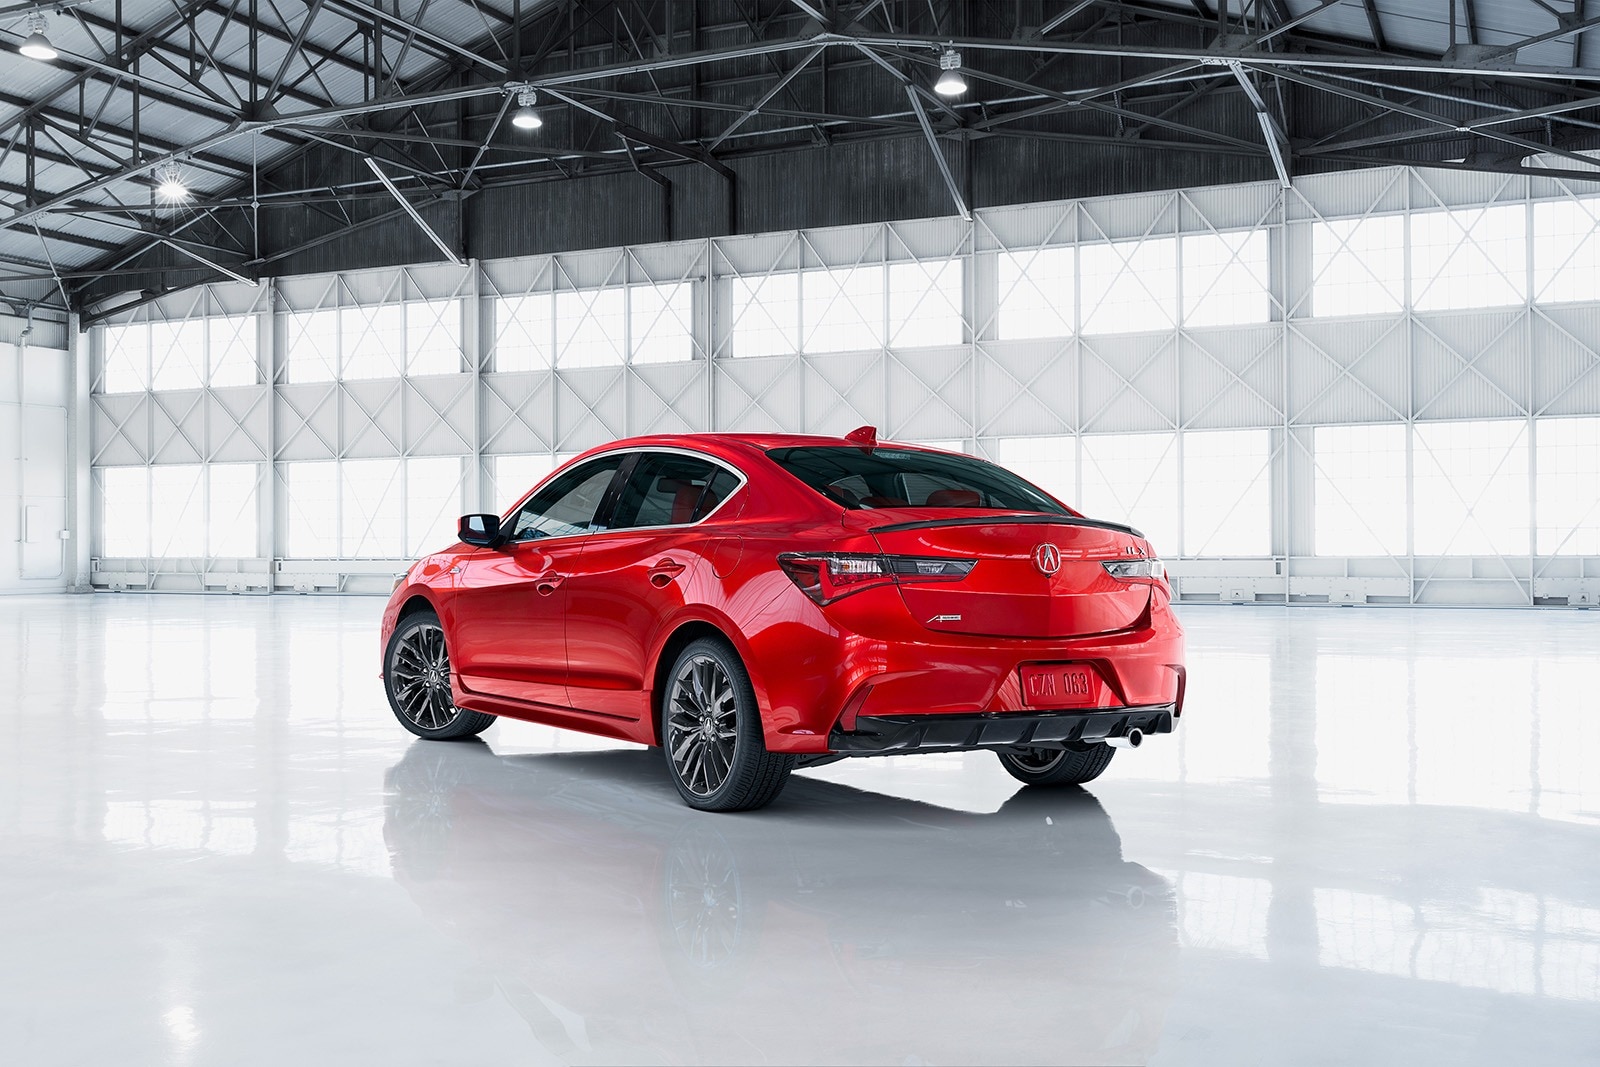 Used 2019 Acura ILX Sedan Review | Edmunds